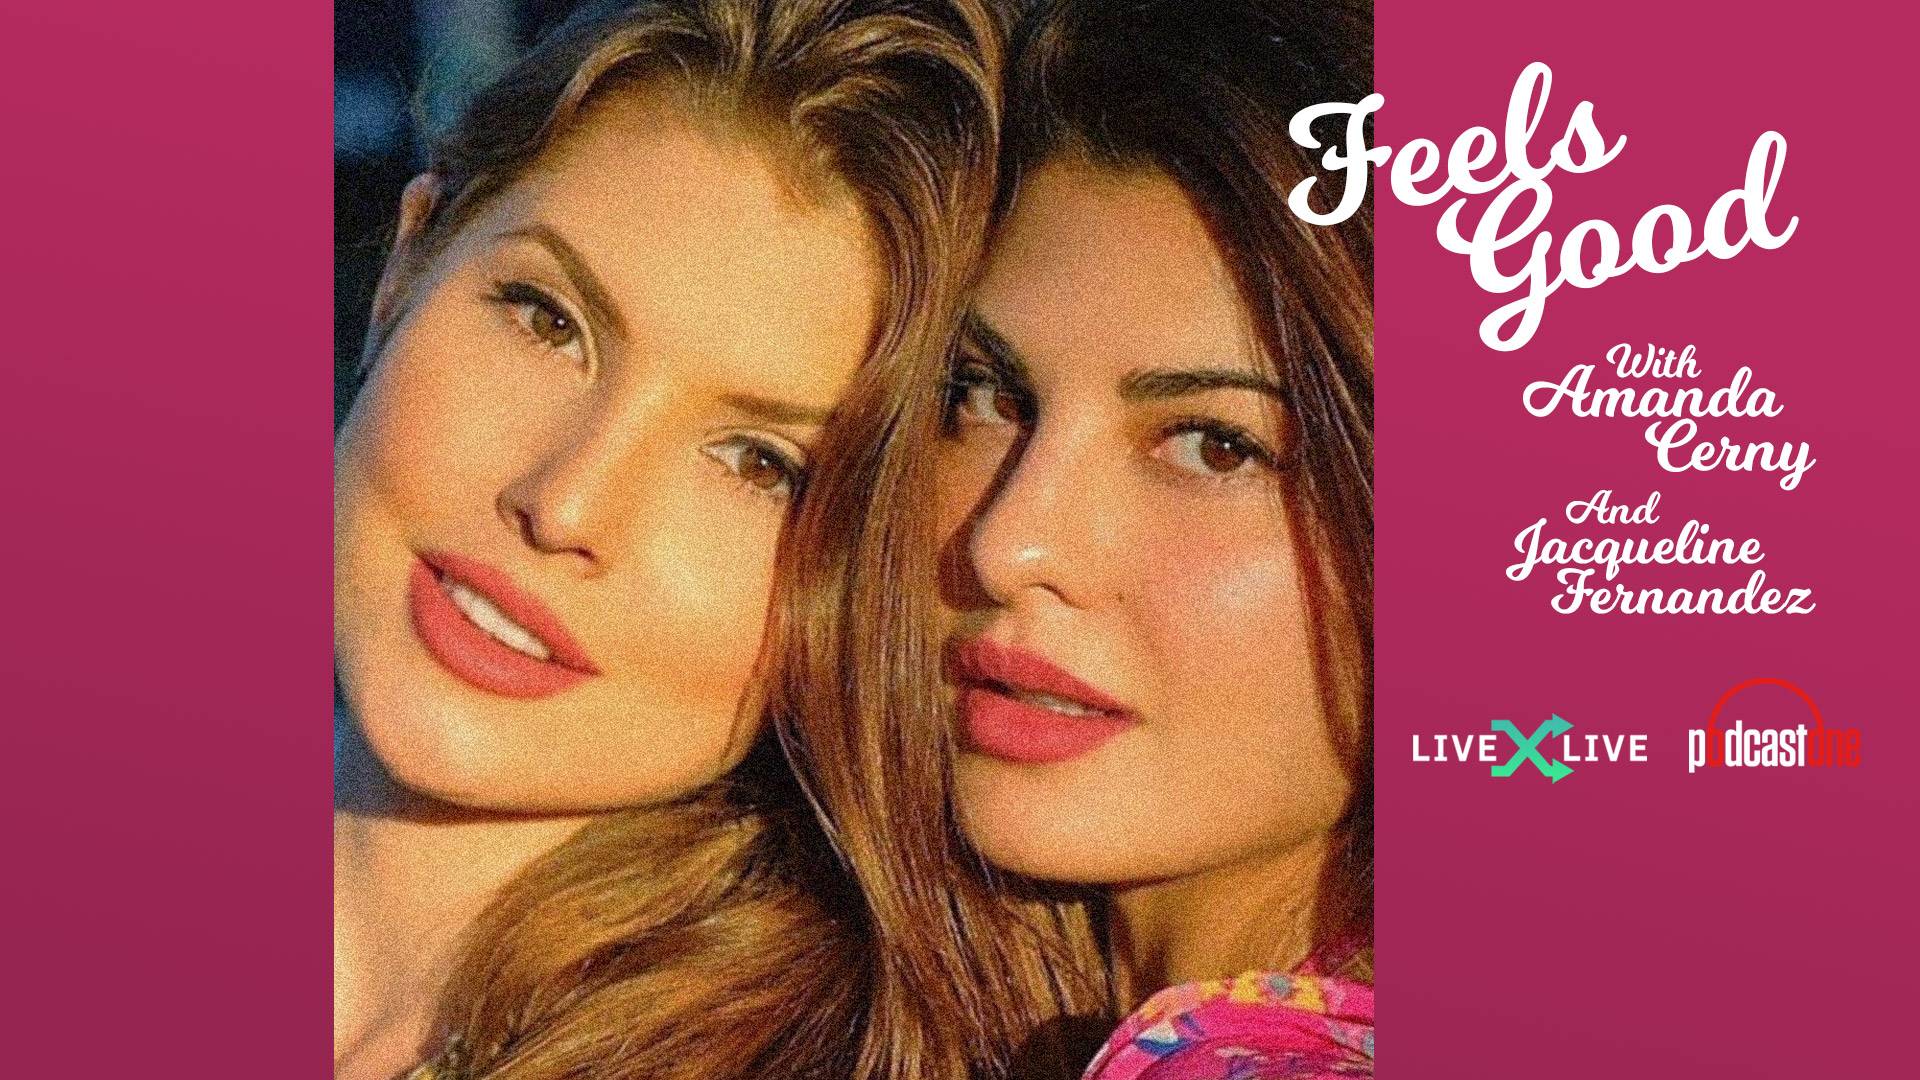 Jequeline Sex Video - Watch Feels Good with Amanda Cerny and Jacqueline Fernandez Videos -  LiveOne - Premium Live Music